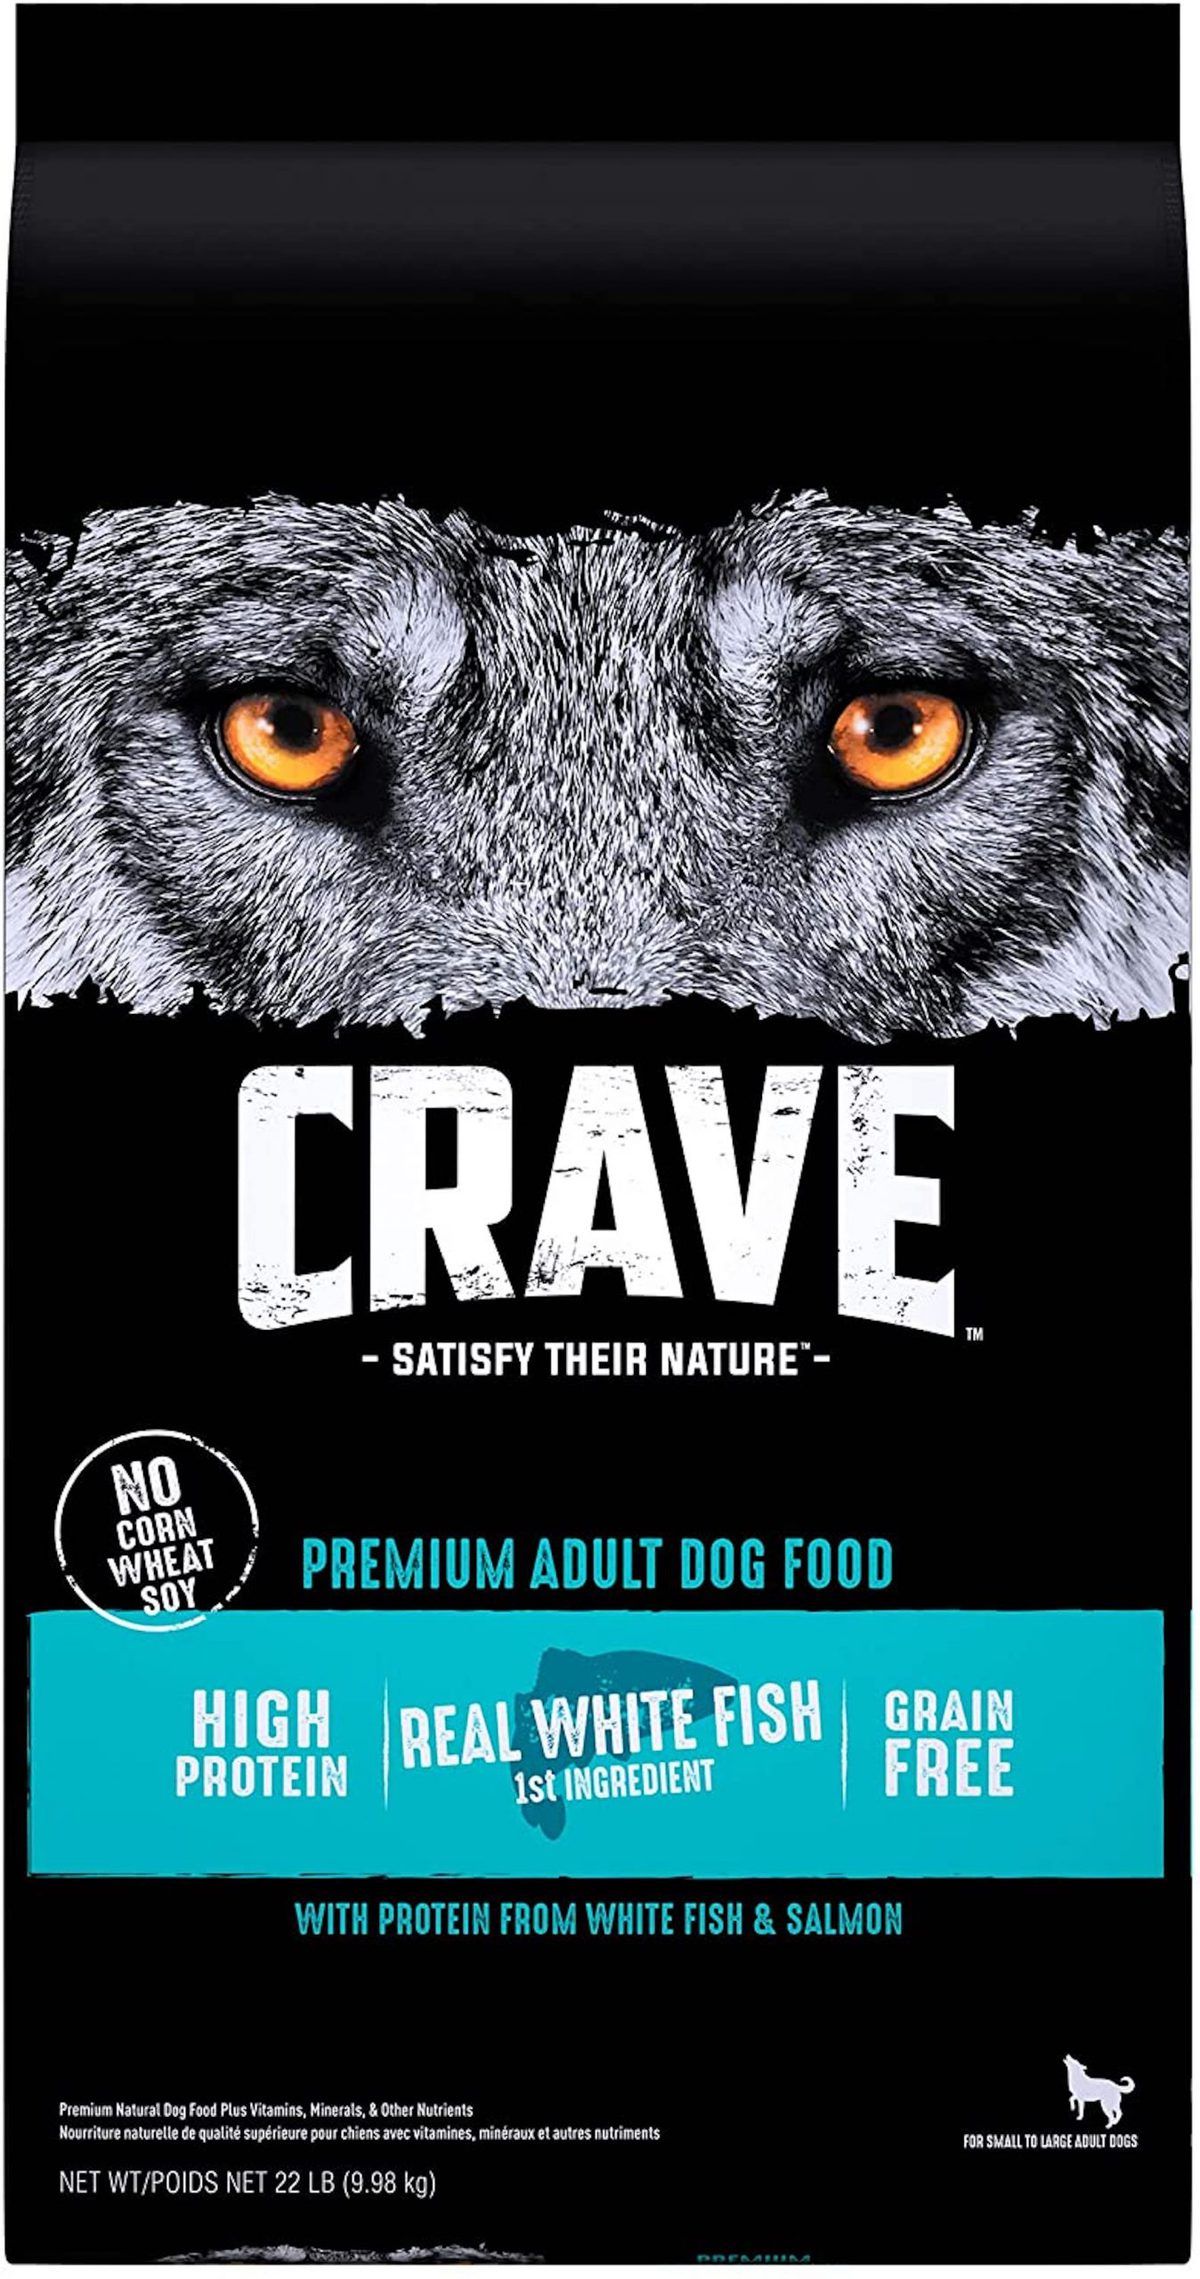 CRAVE শস্য-মুক্ত উচ্চ প্রোটিন সালমন ও ওশেনফিশ